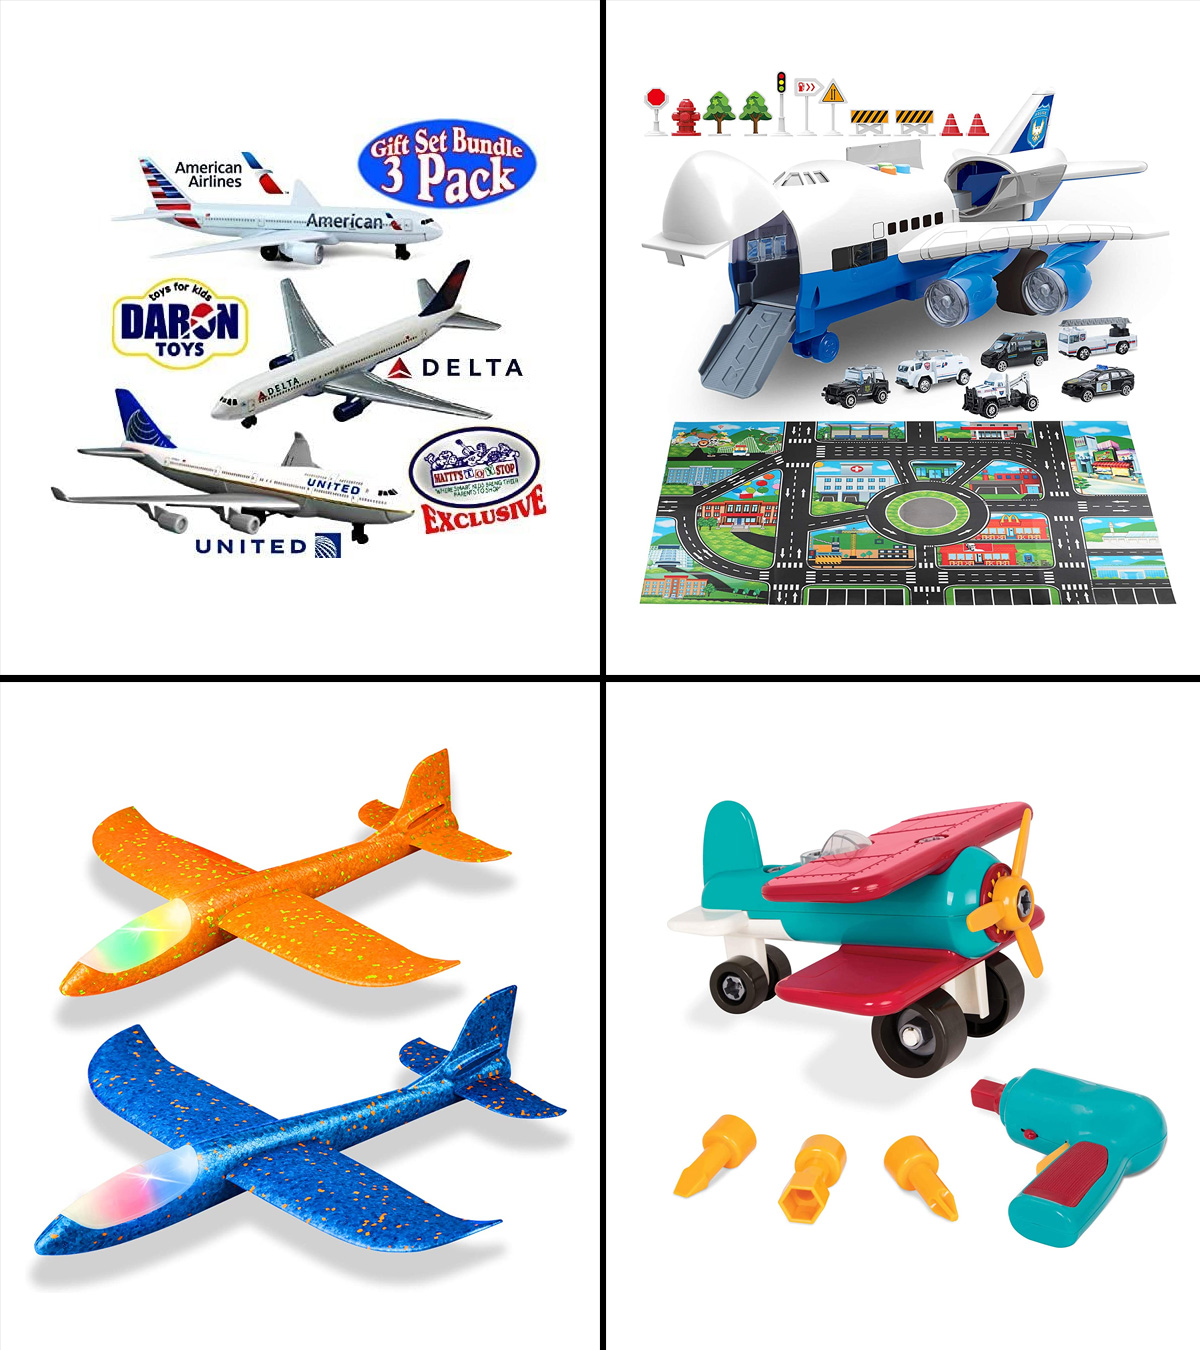 https://www.momjunction.com/wp-content/uploads/2021/09/Best-Toy-Airplanes-For-Kids-ToBuy.jpg